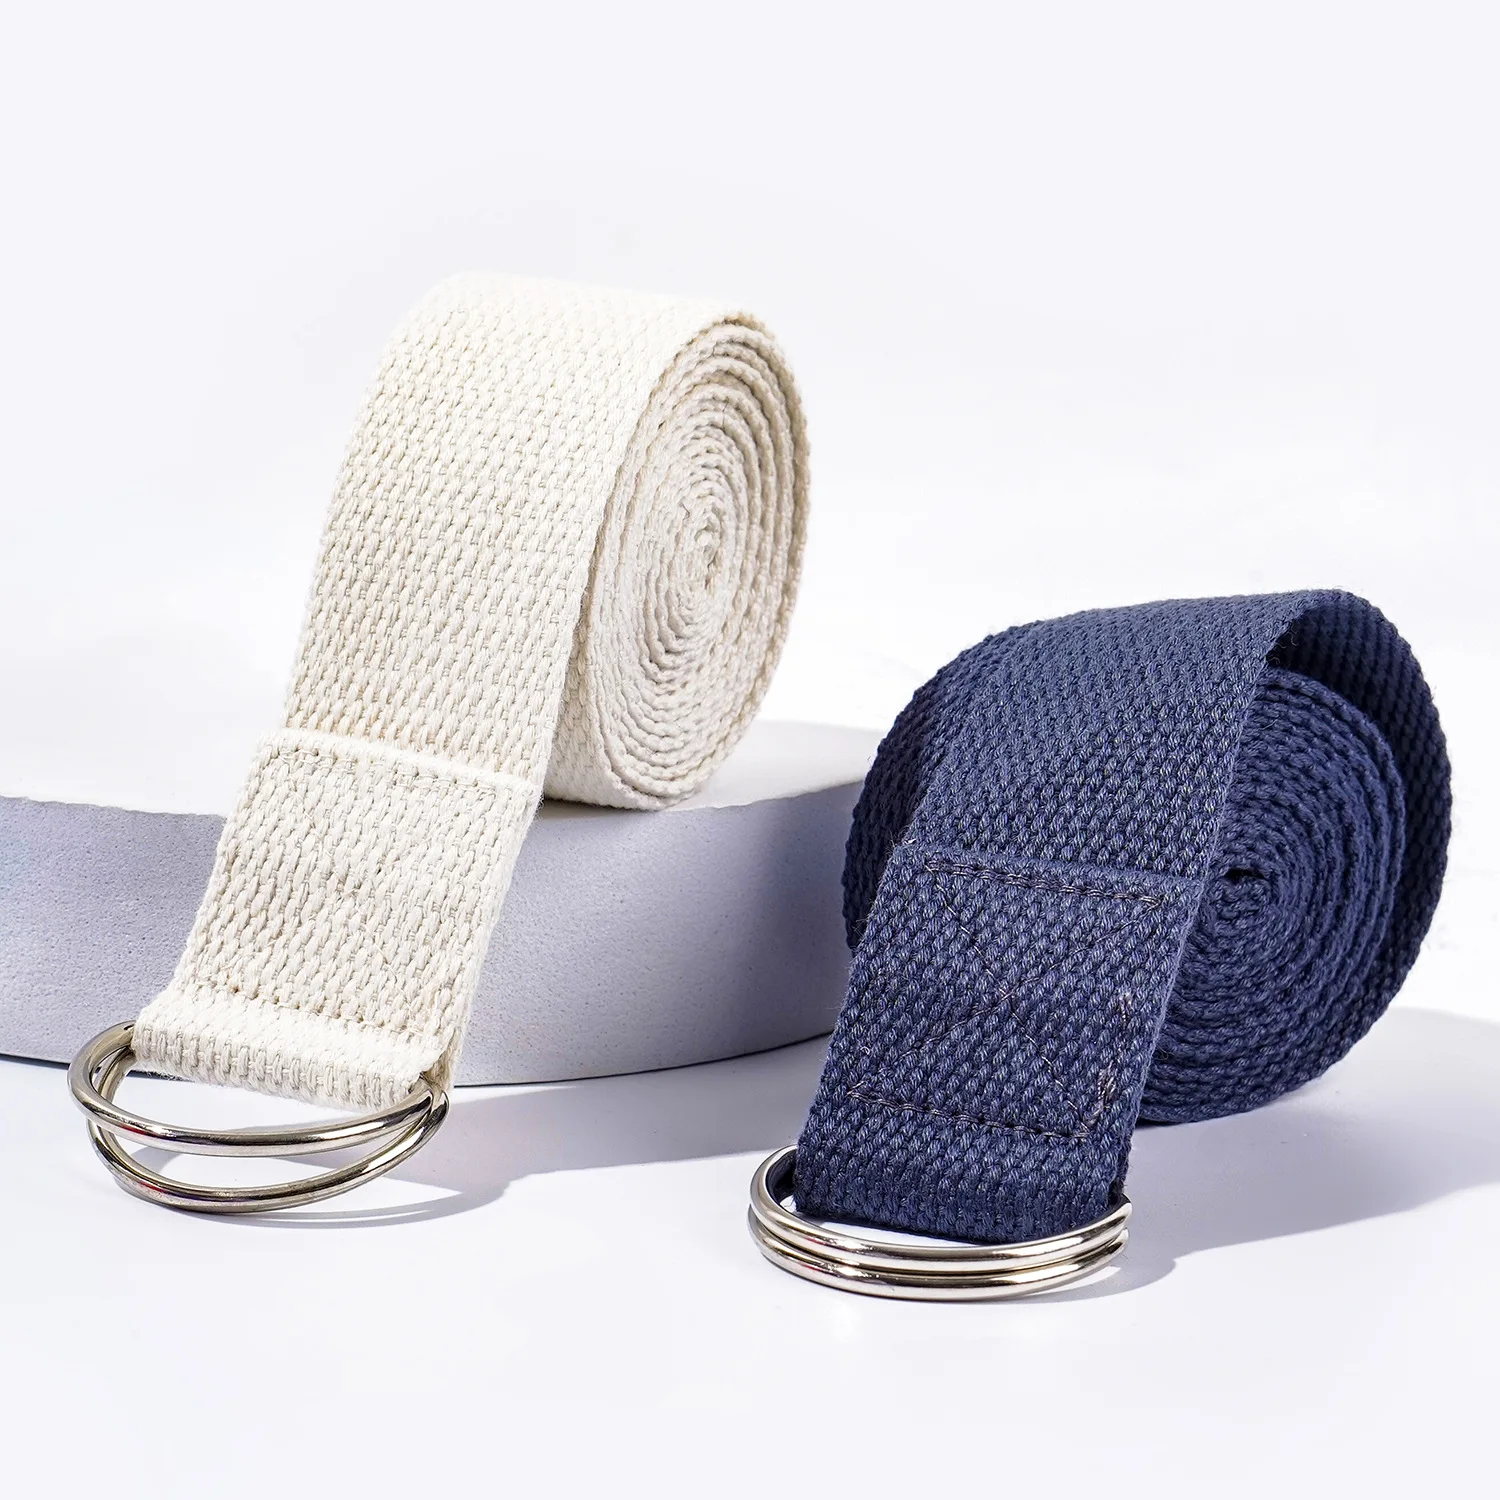 Cotton Yoga Strap/Belt with Extra Safe Adjustable D-Ring Buckle for Pi –  AJRO DEAL